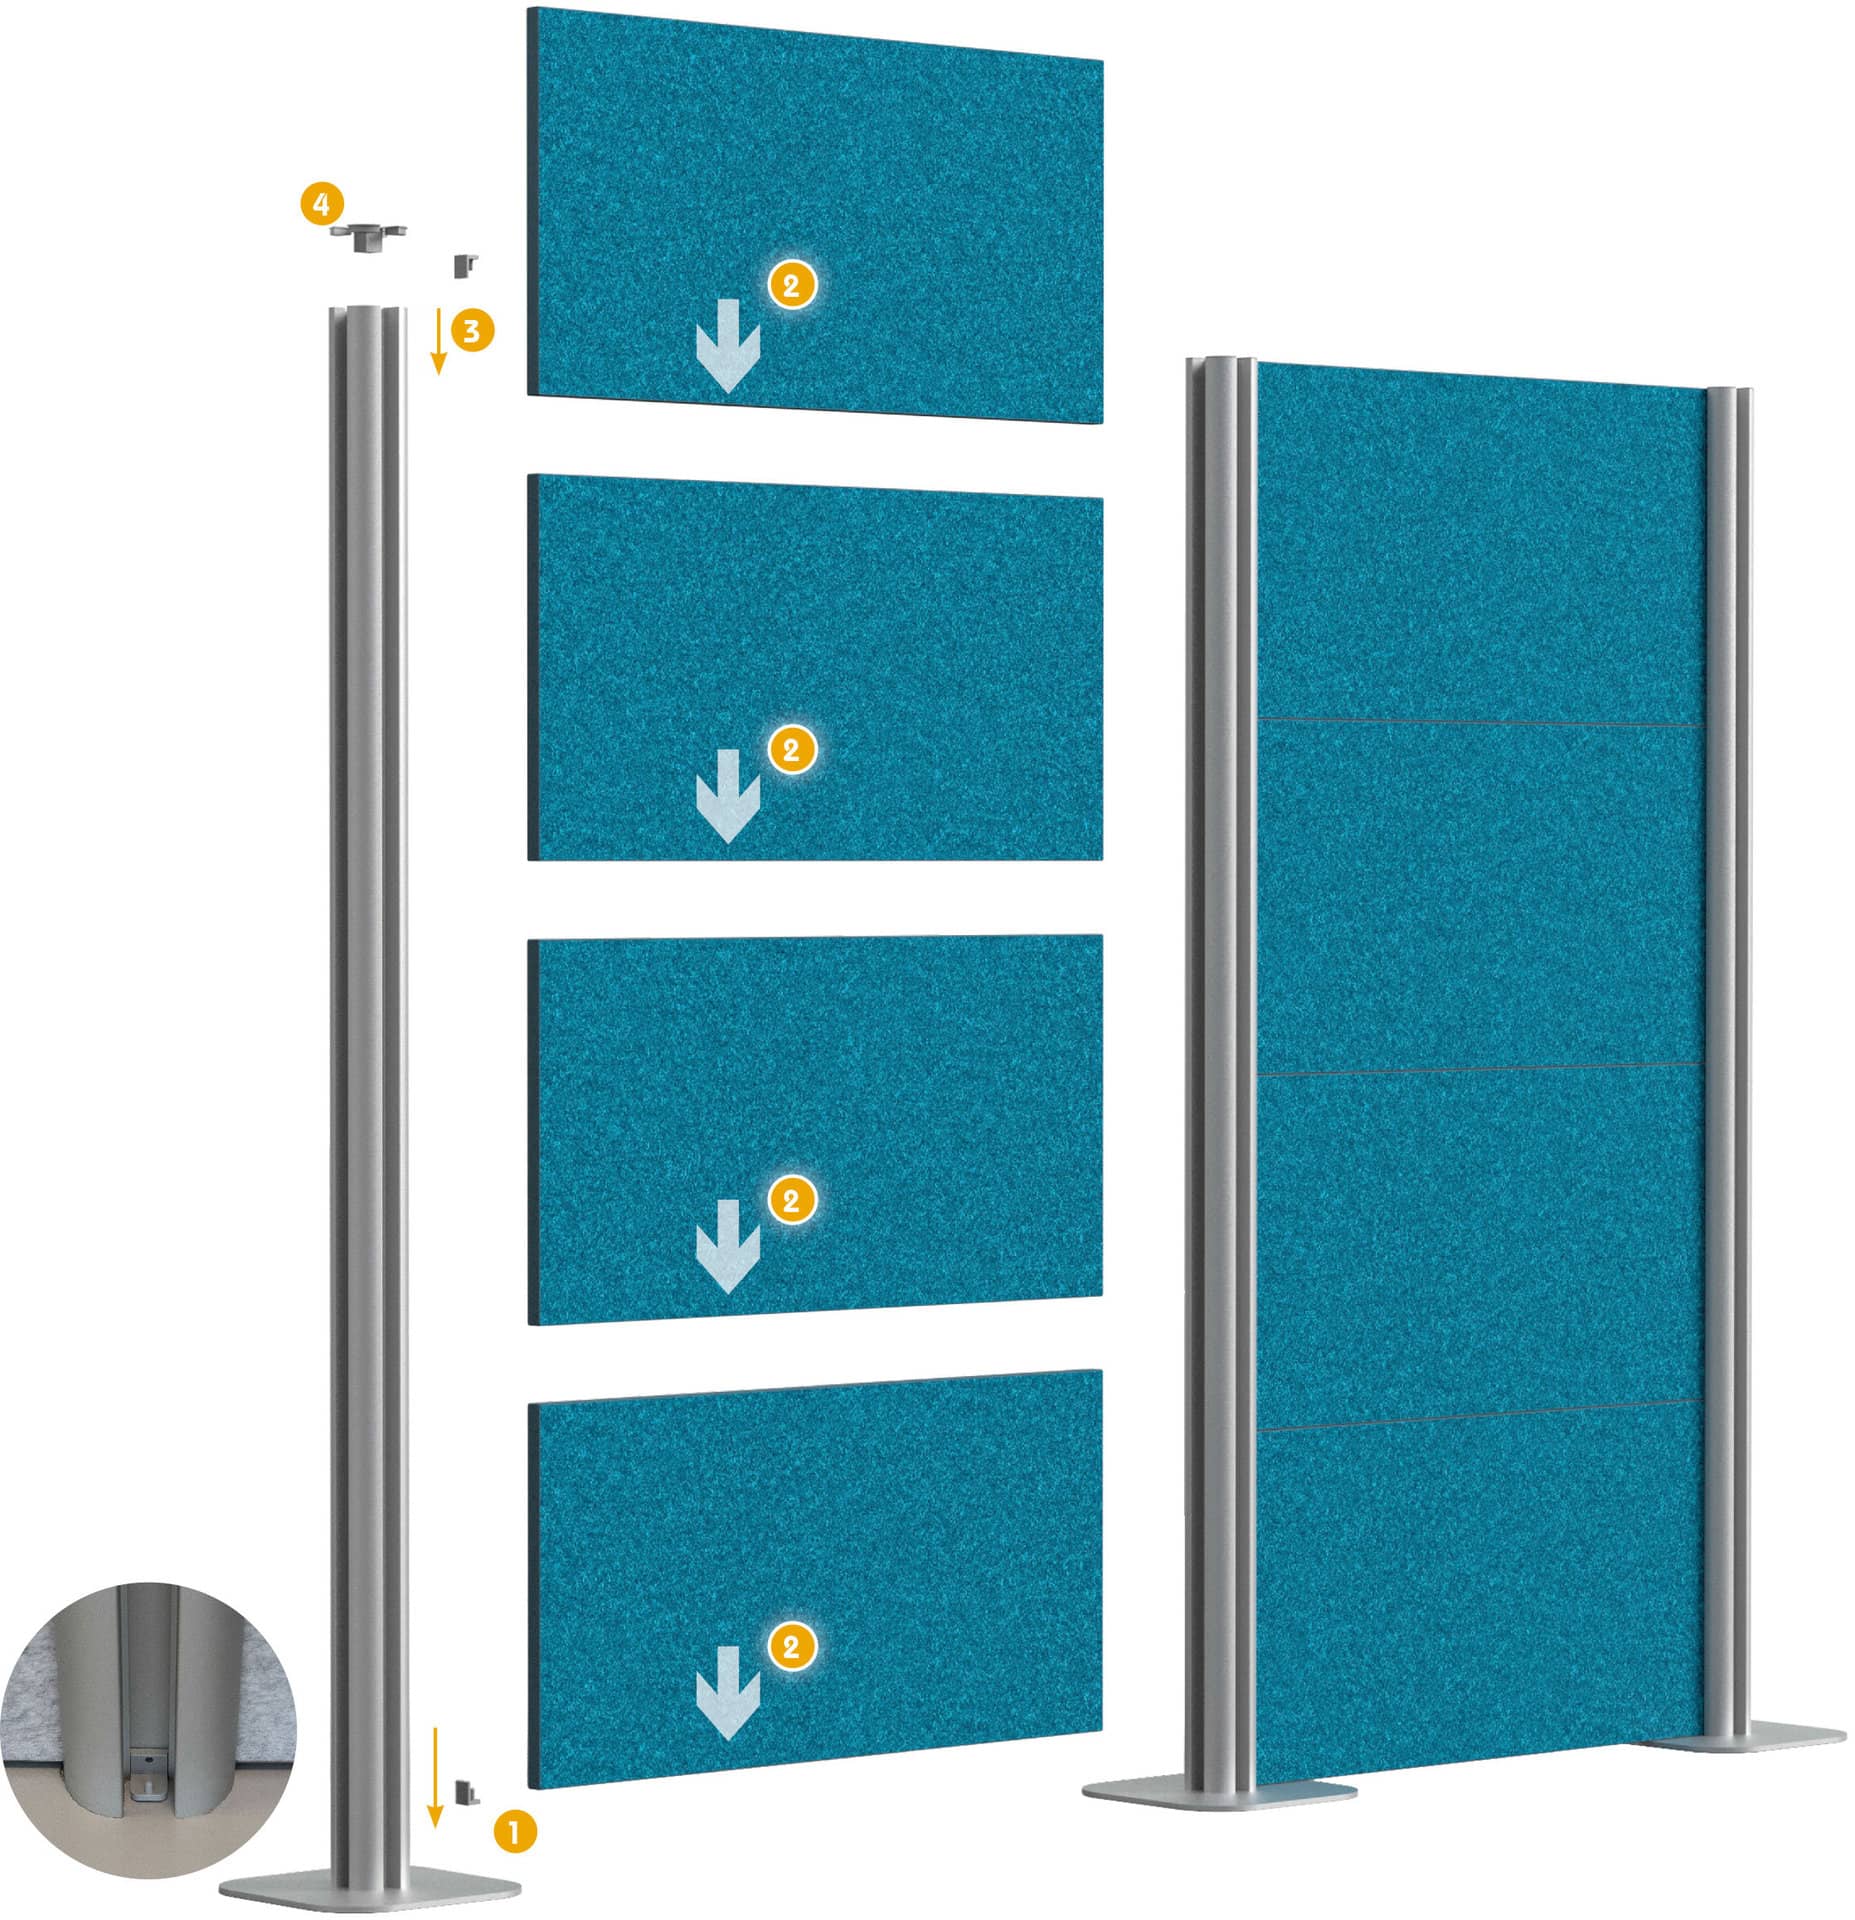 ropimex Sound insulation DIVI cube partition walls and divider system - construction scheme